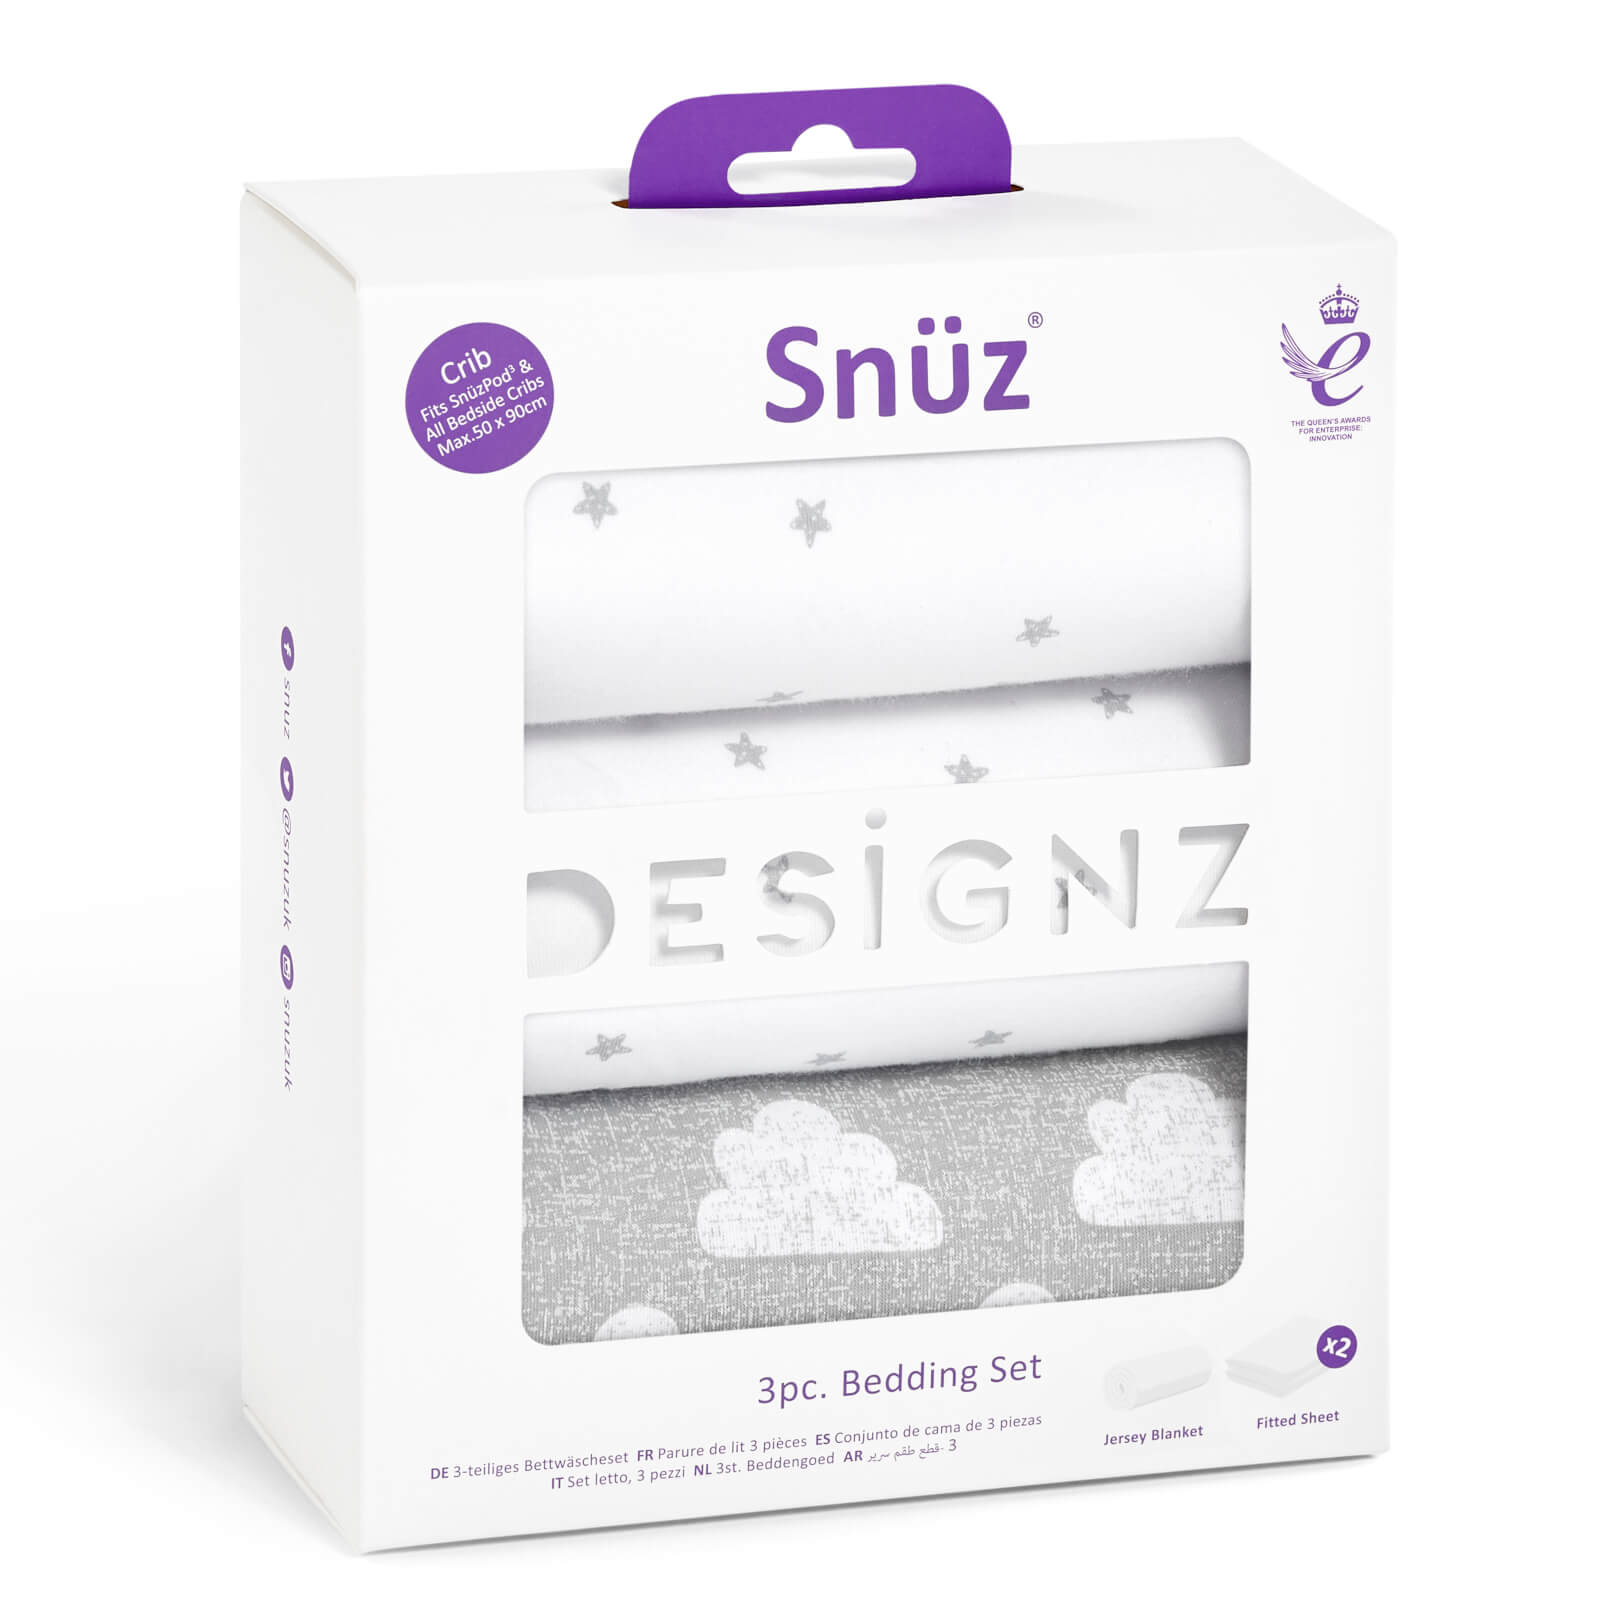 Snuz 3 Piece Bedside Crib Bedding Set - Cloud Nine